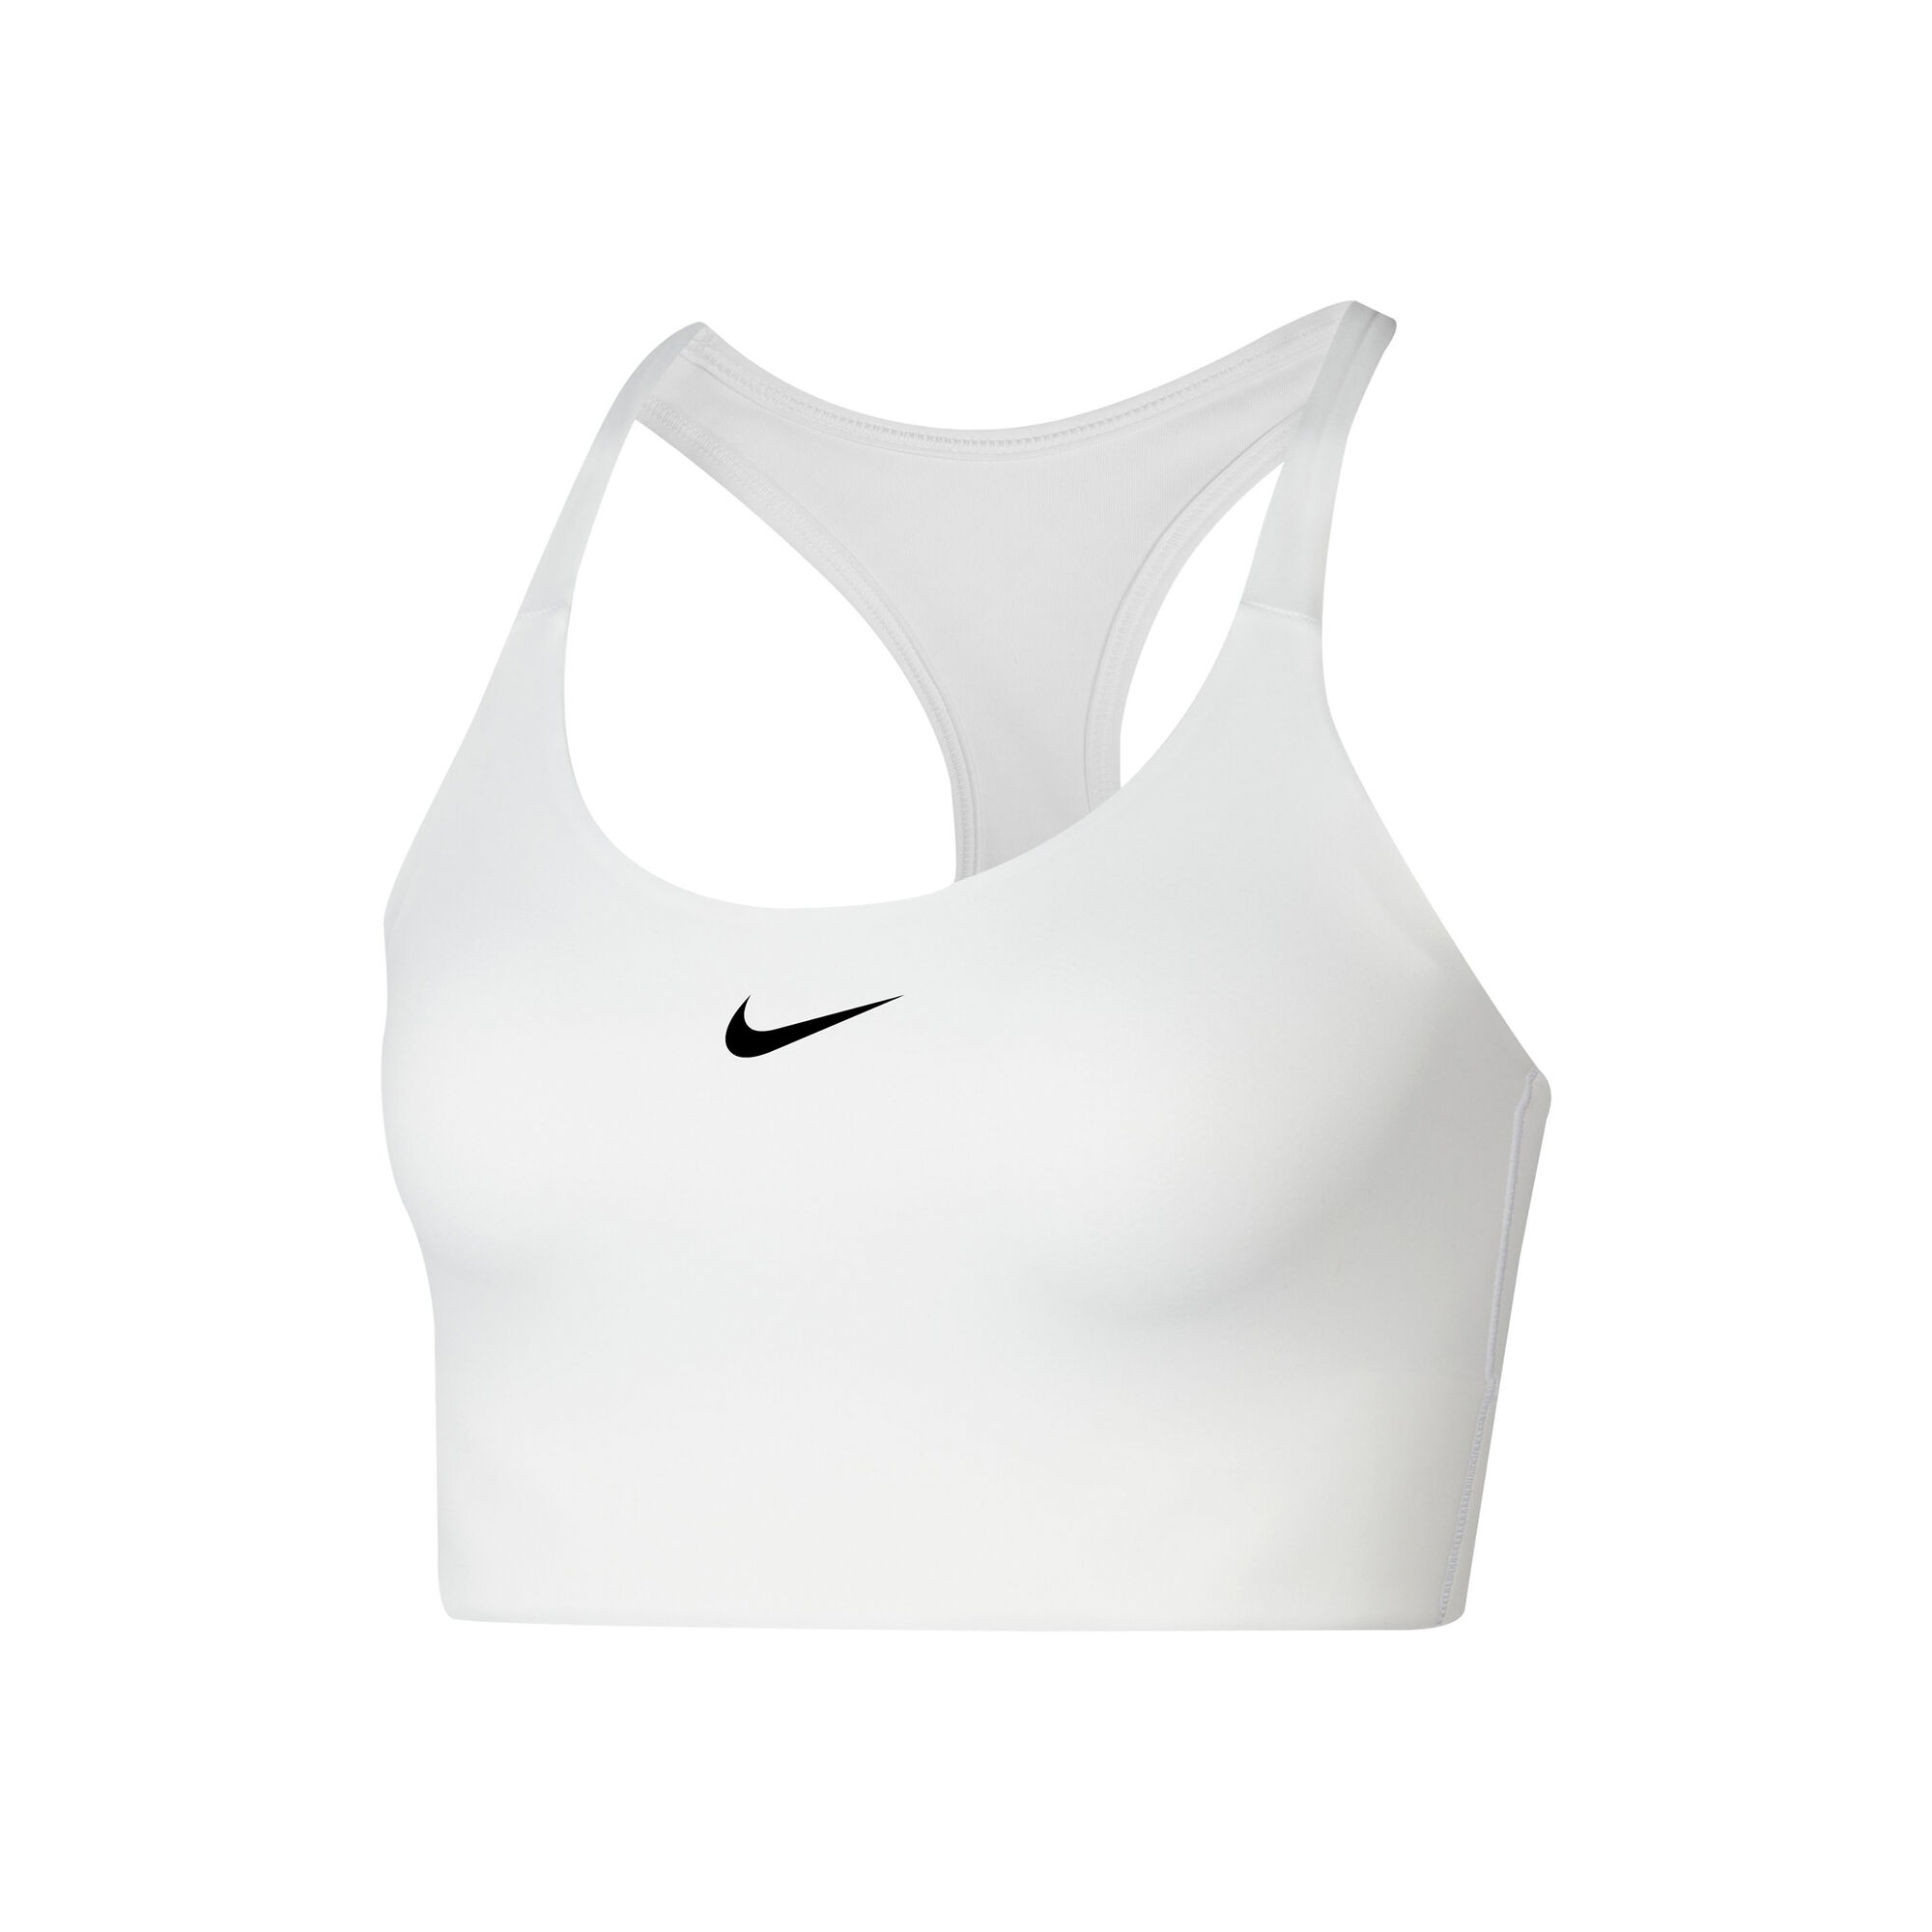 buy Nike Sports Bras Women - White online | Tennis-Point